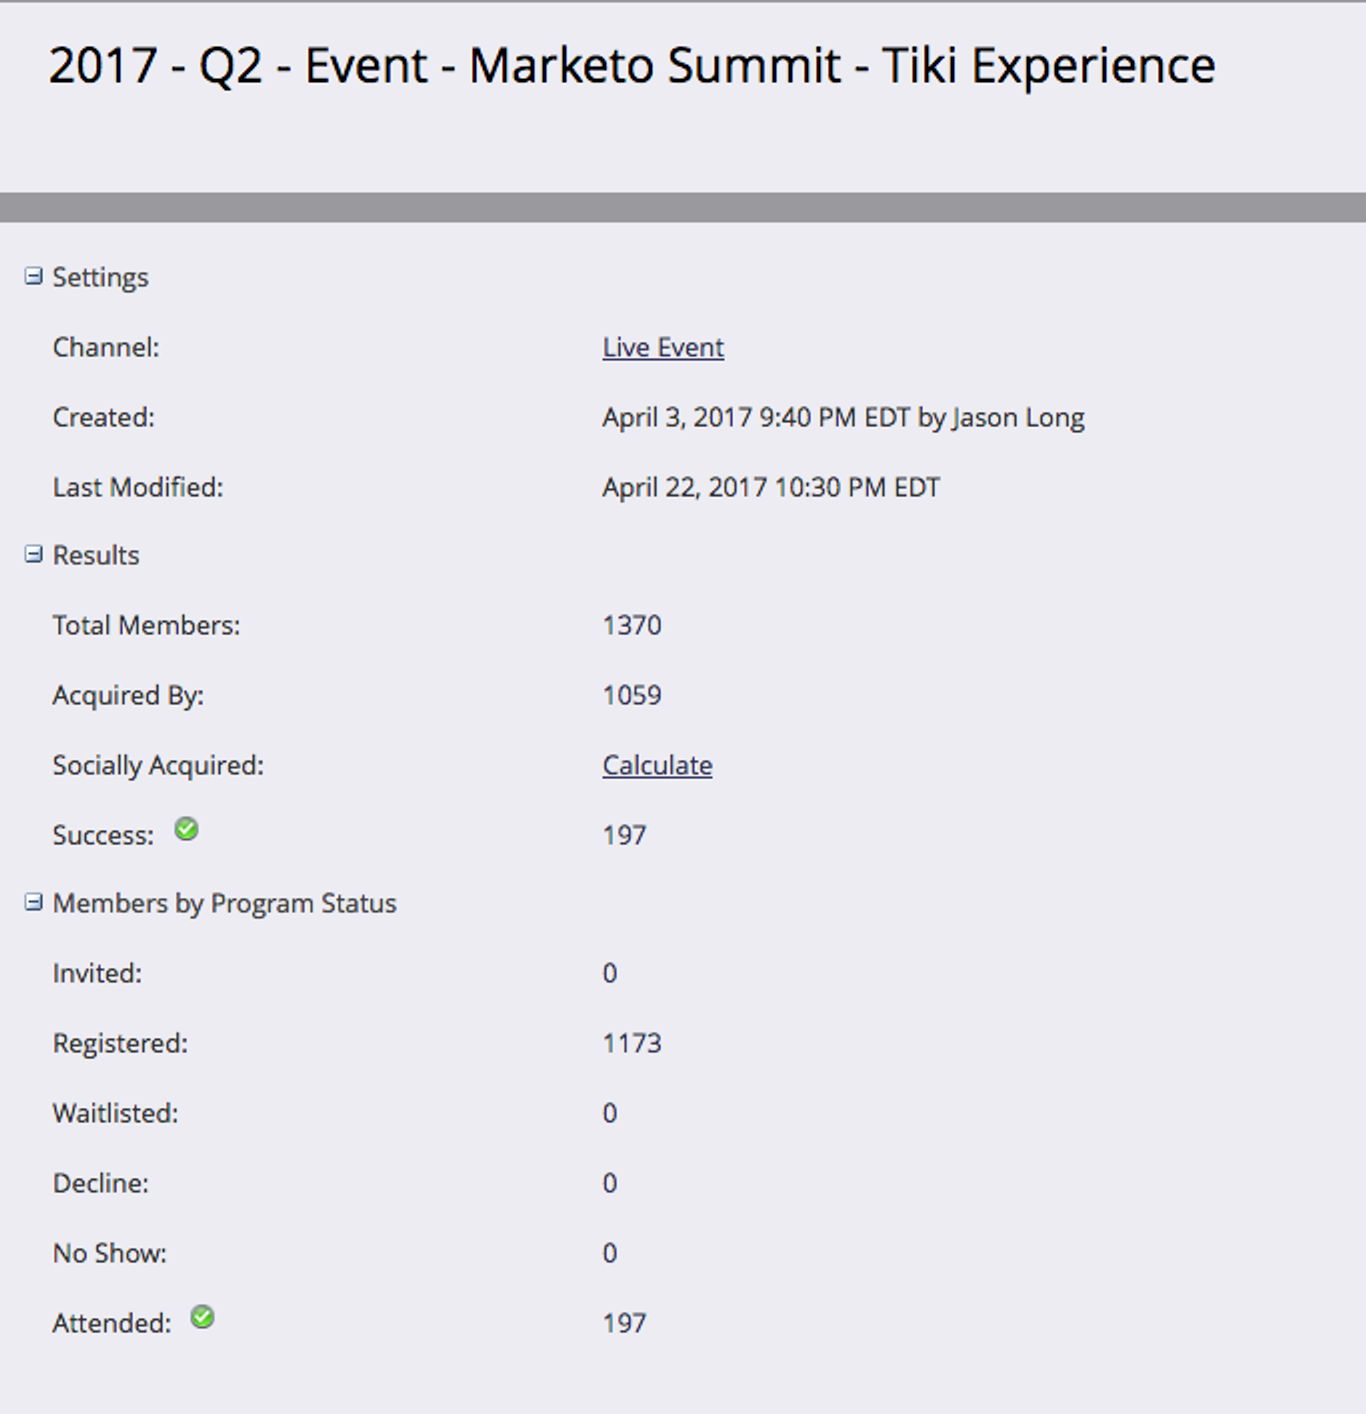 Tiki Experience Marketo